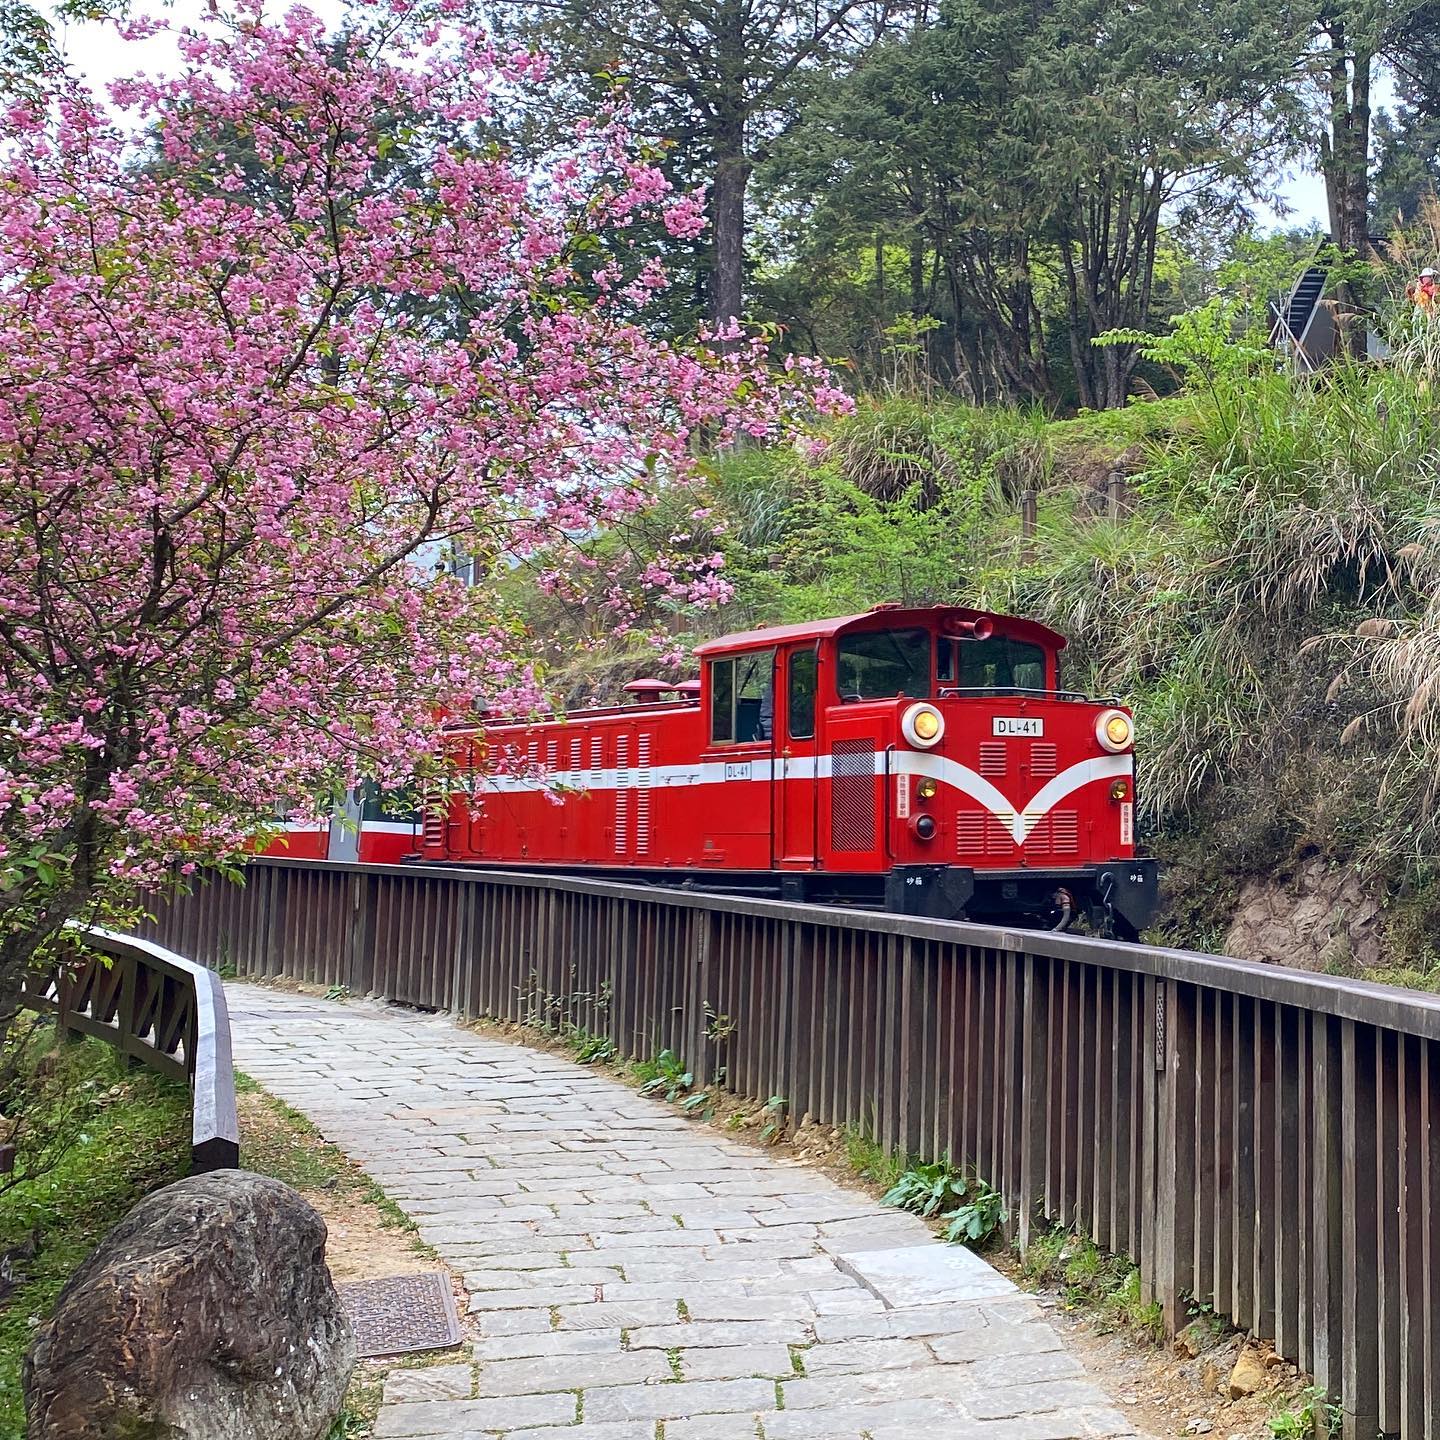 Alishan Forest Railway - Alishan Forest train through cherry blossom trees